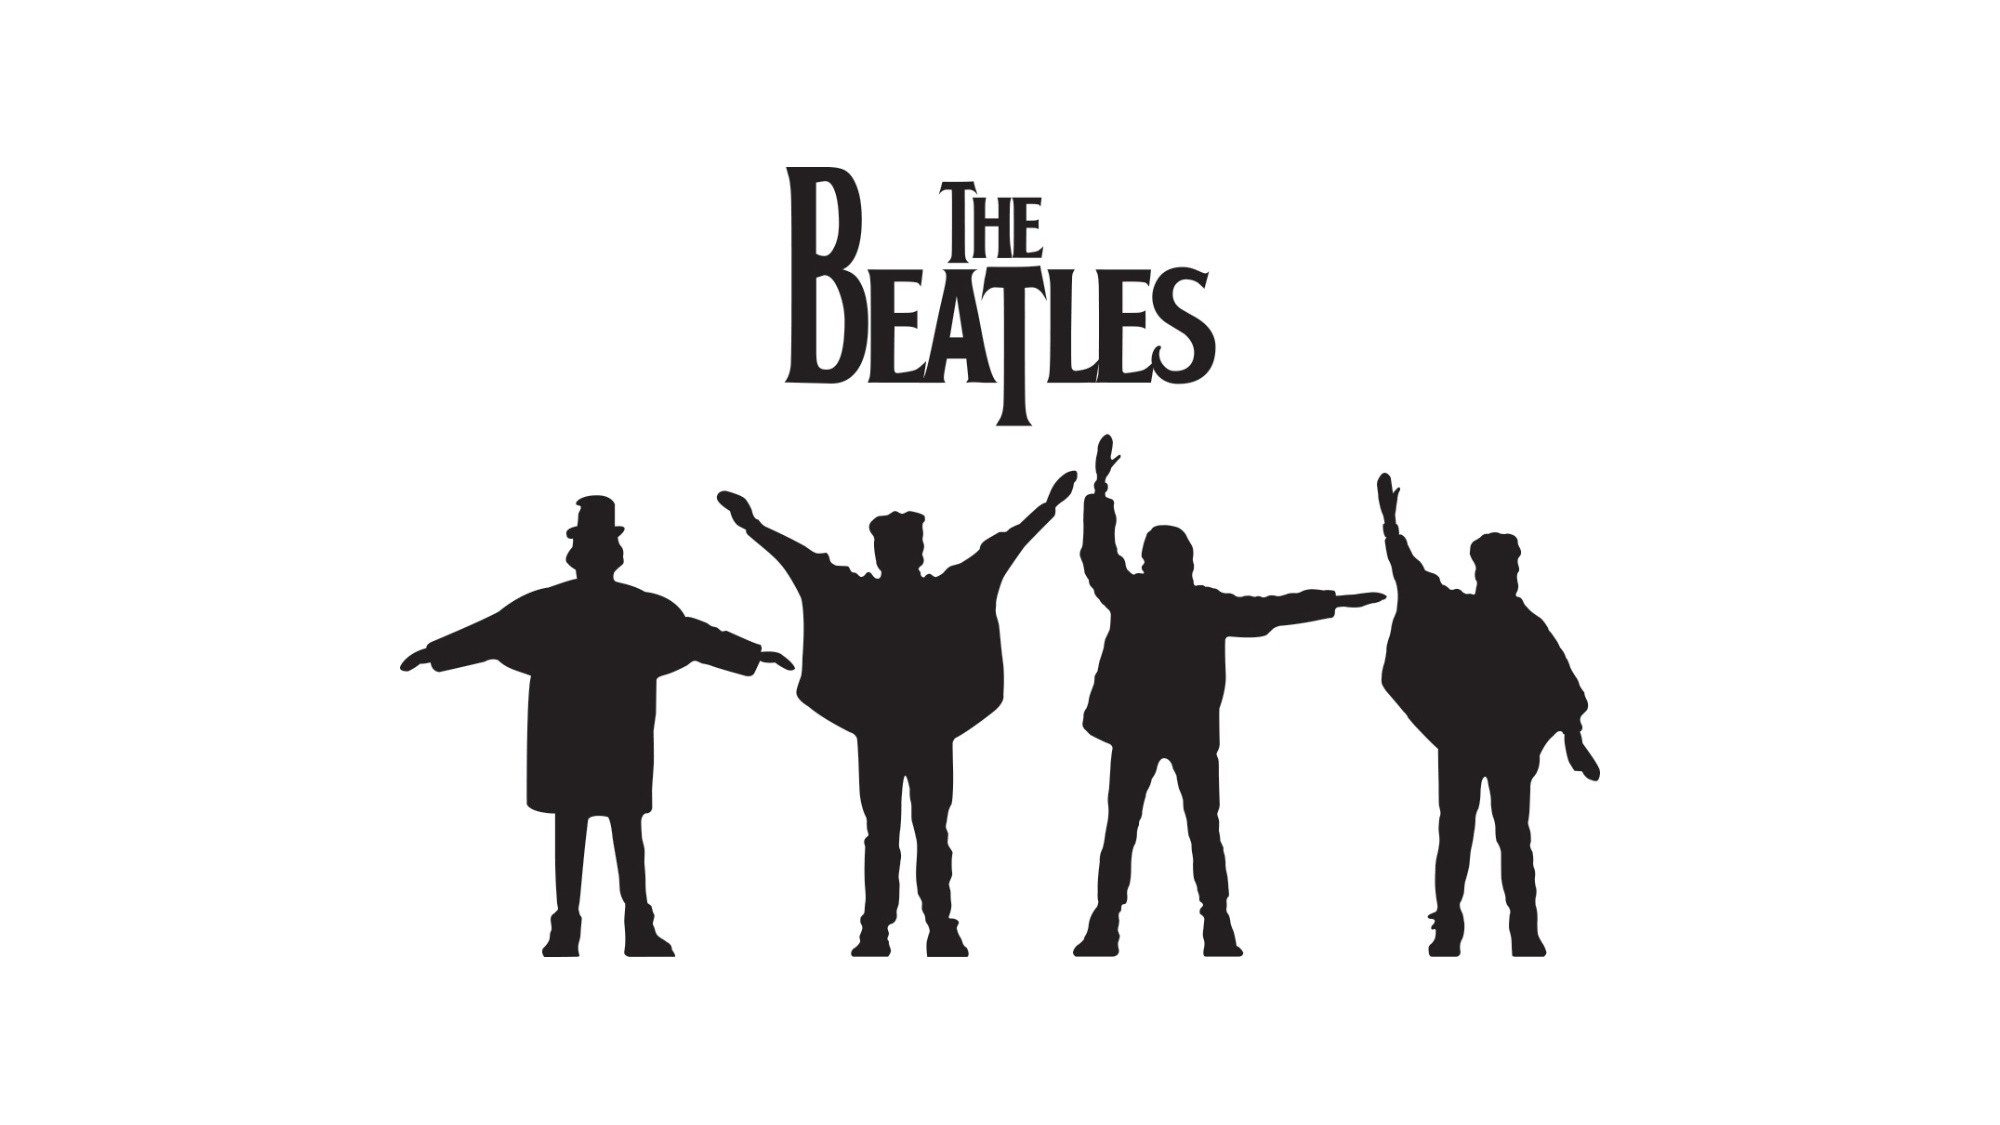 General 2000x1125 The Beatles John Lennon Paul McCartney Ringo Starr George Harrison band simple background digital art